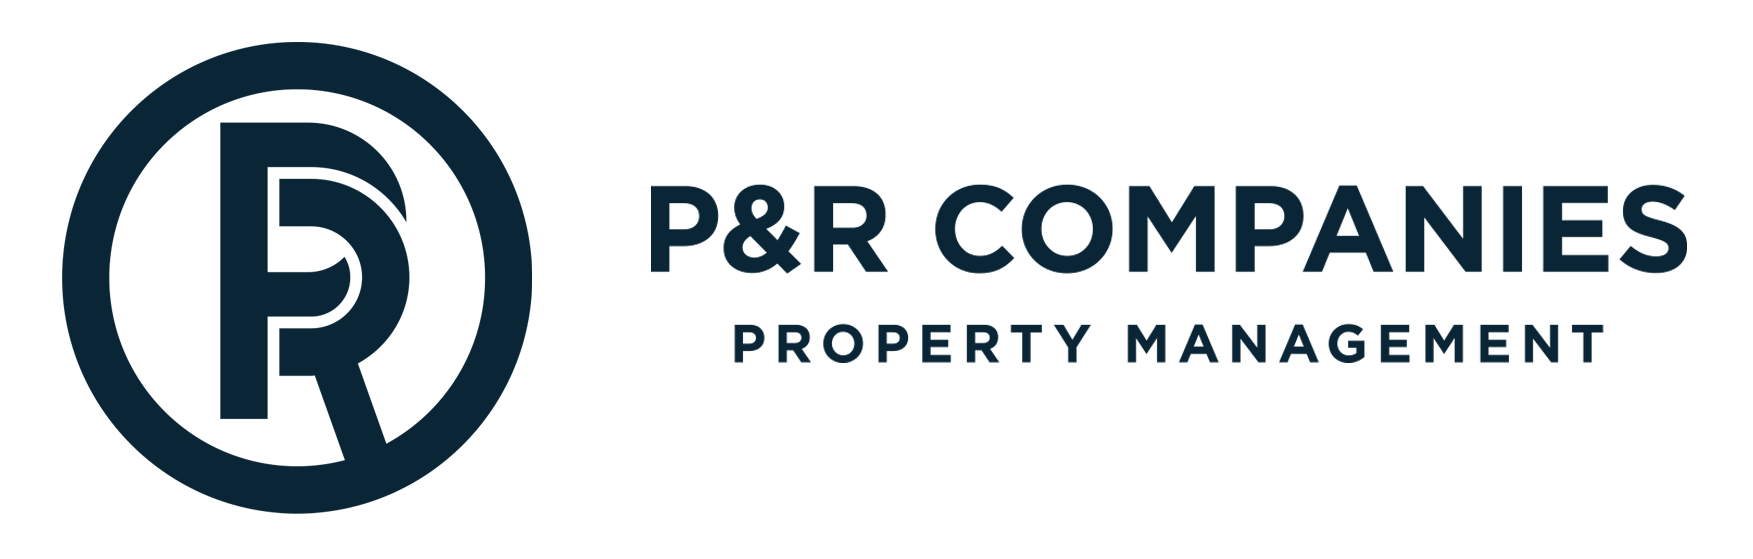 P&R Companies property management logo